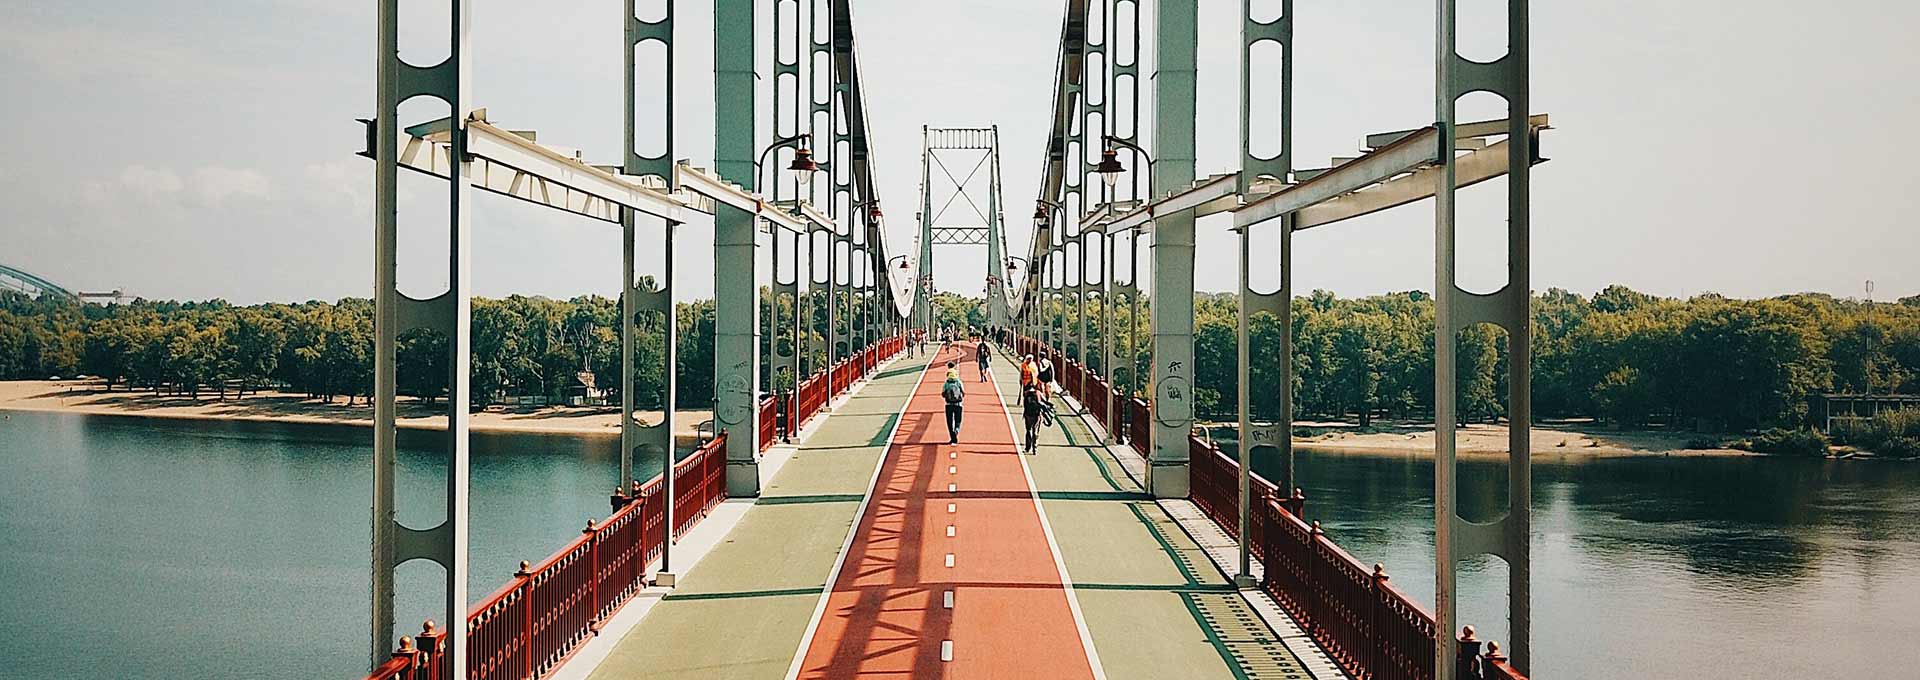 A bridge with people walking across